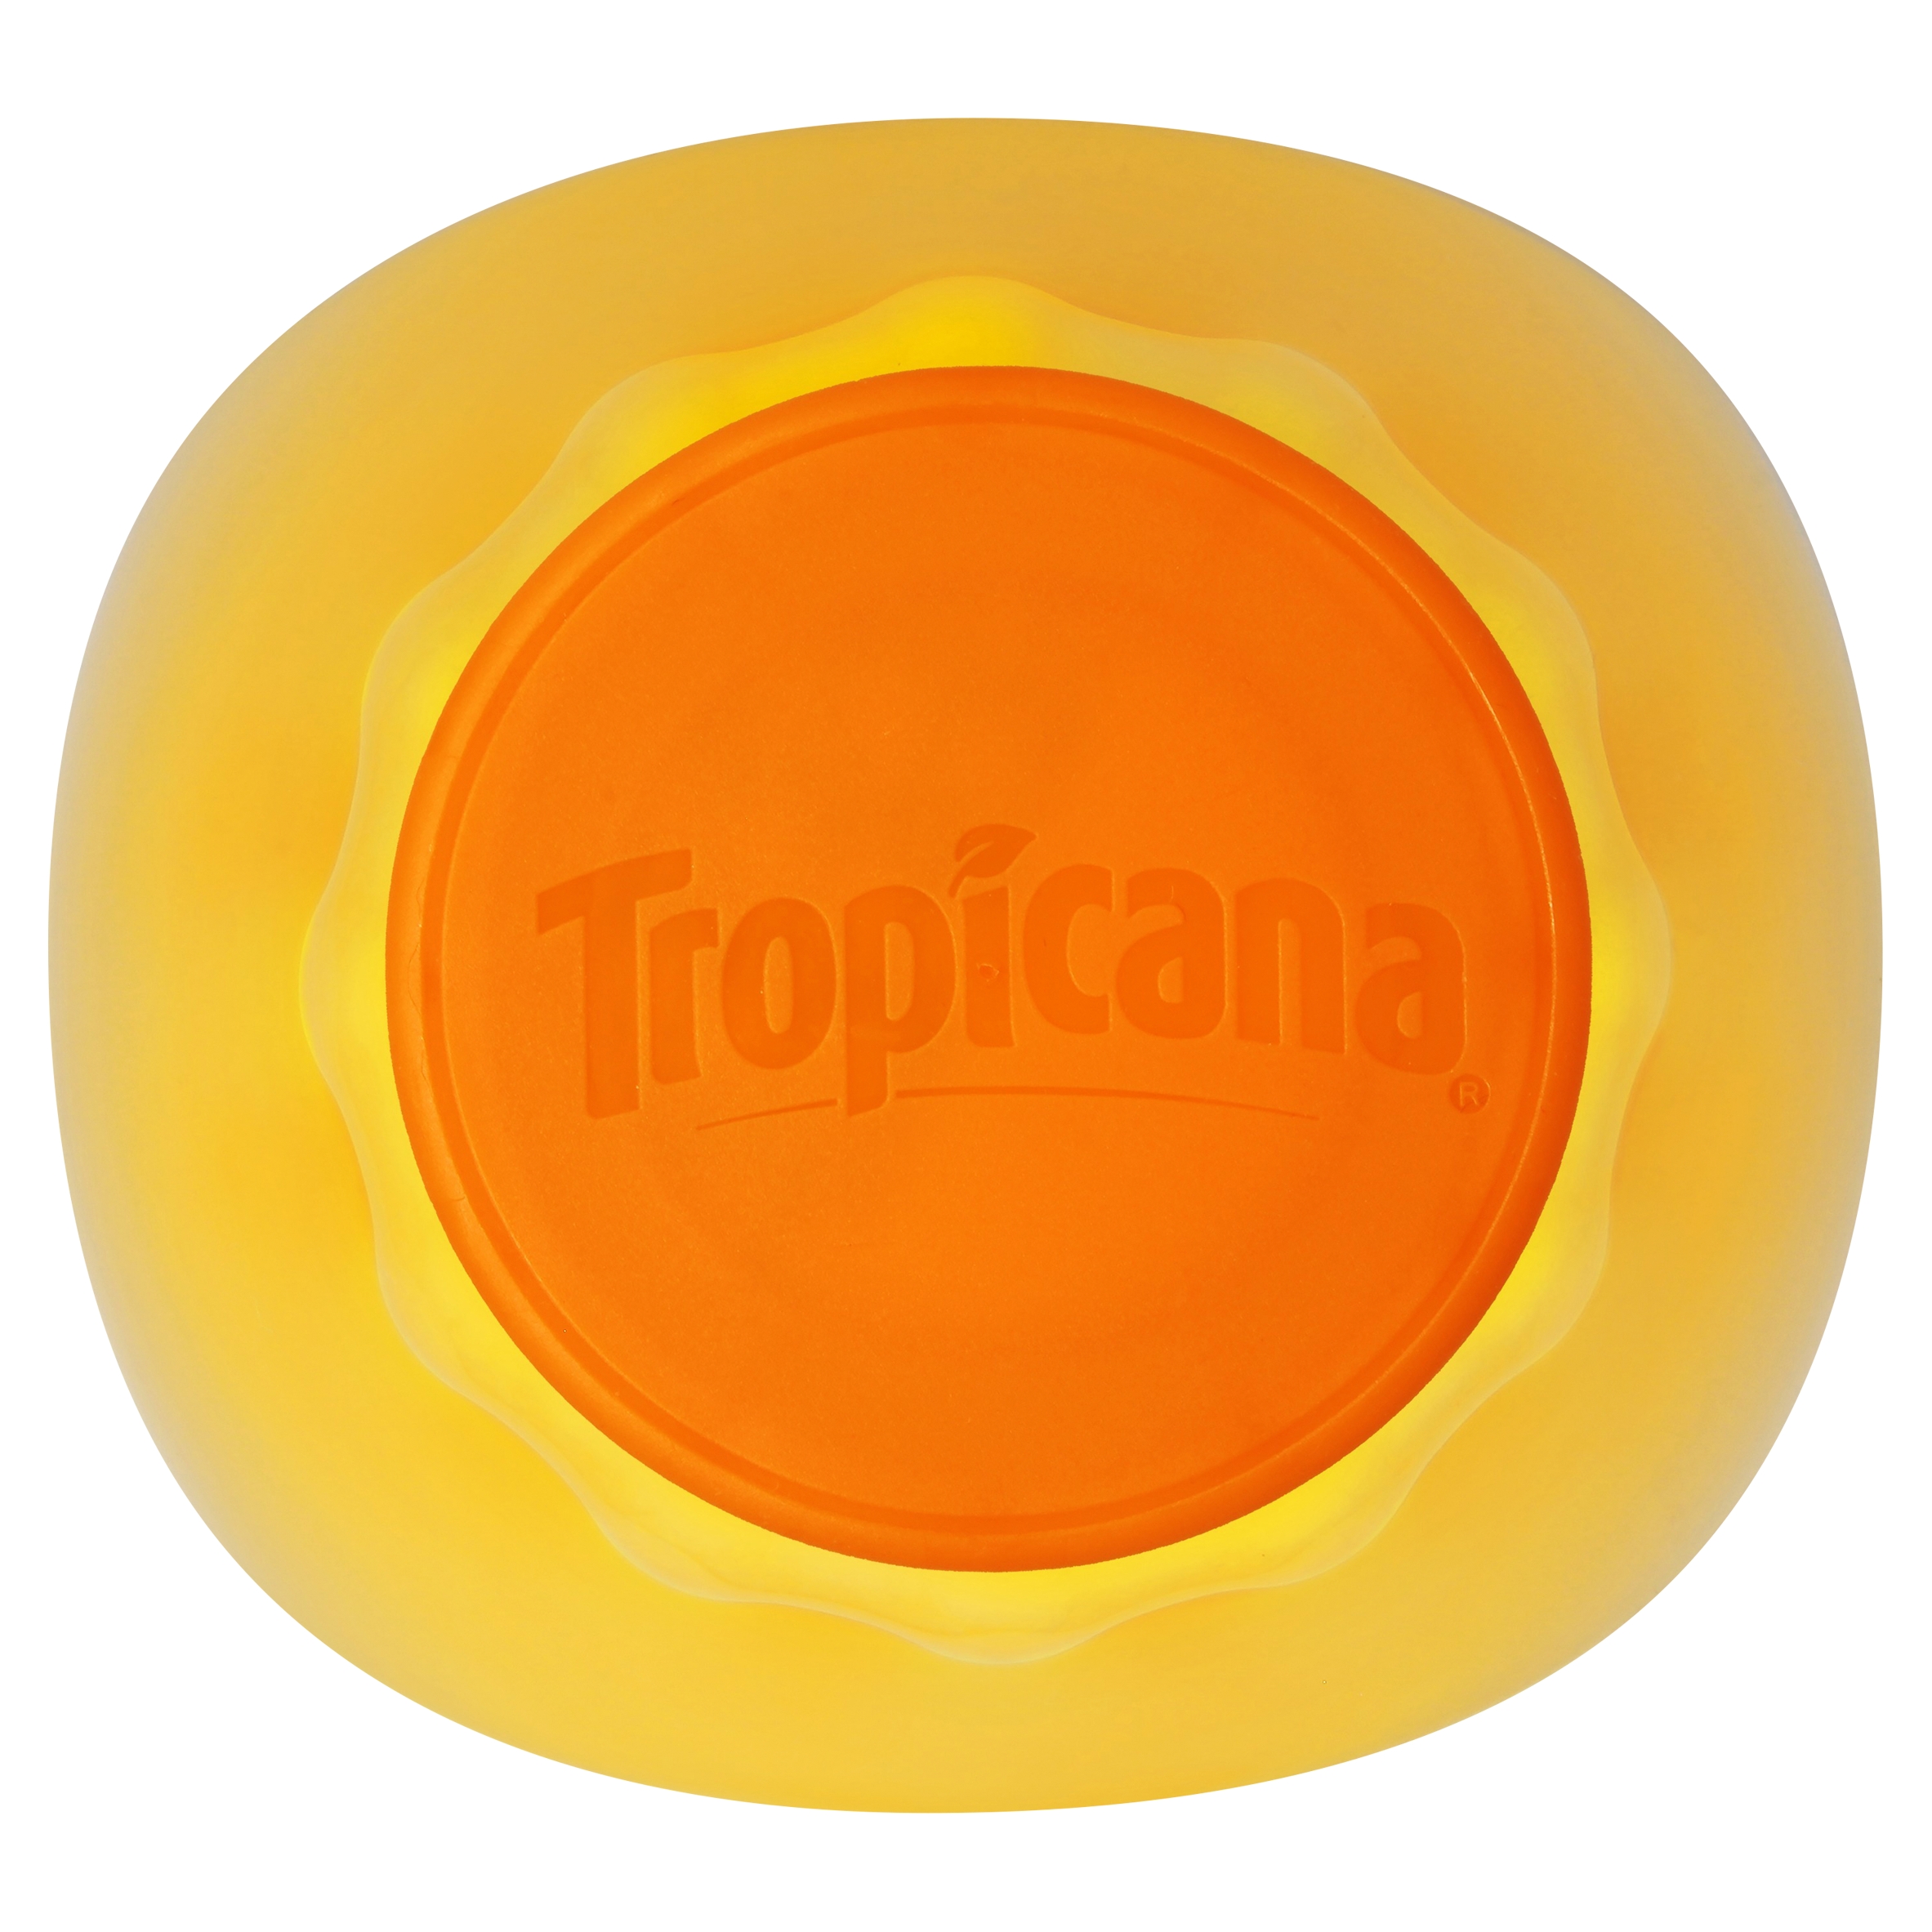 Tropicana Pure Premium, Homestyle Some Pulp 100% Orange Juice, 52 oz Bottle - image 4 of 9